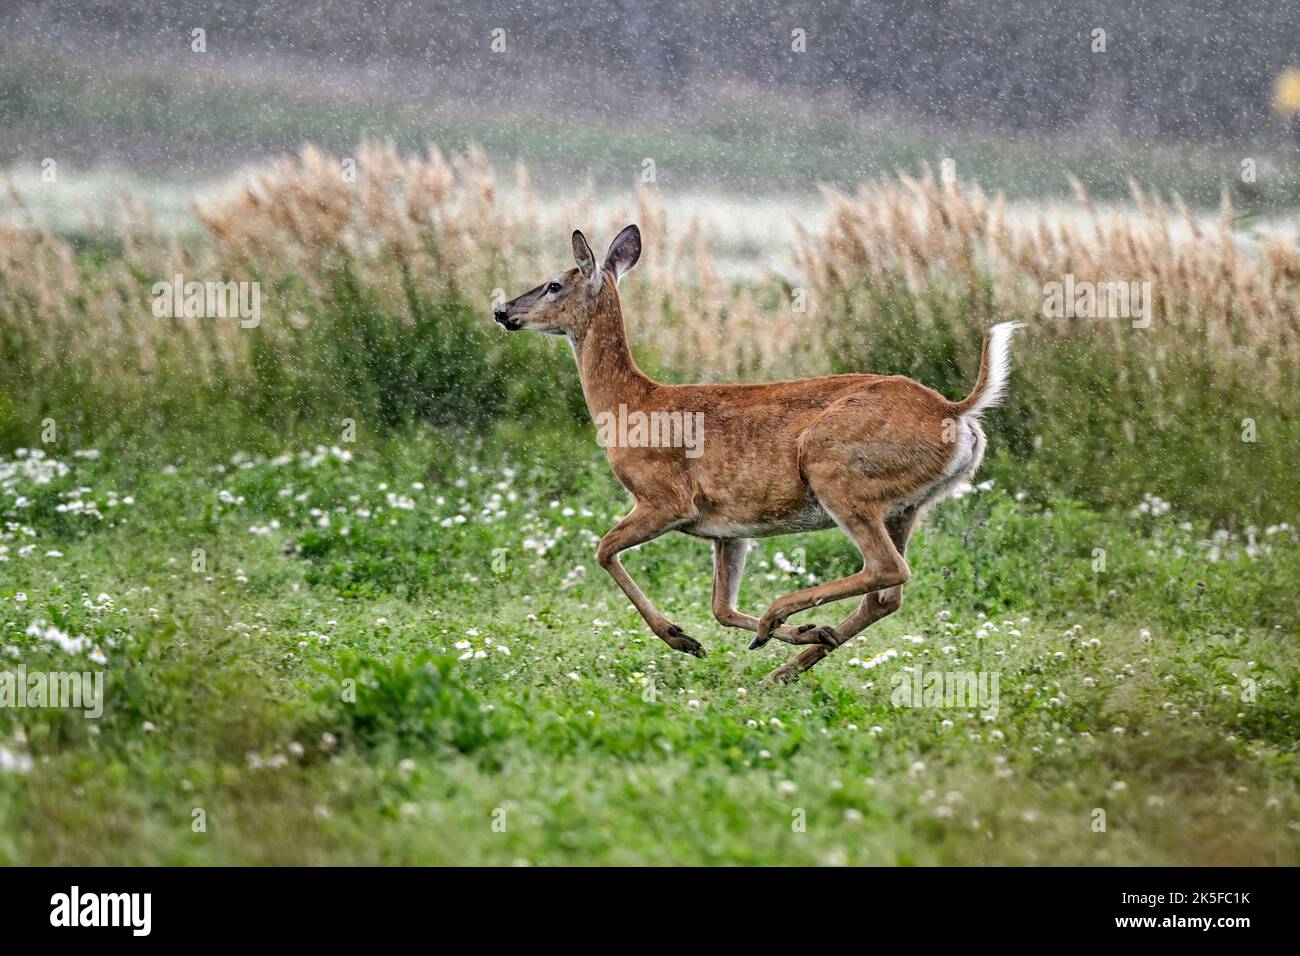 White-tailed deer is running in heavy rain Stock Photo